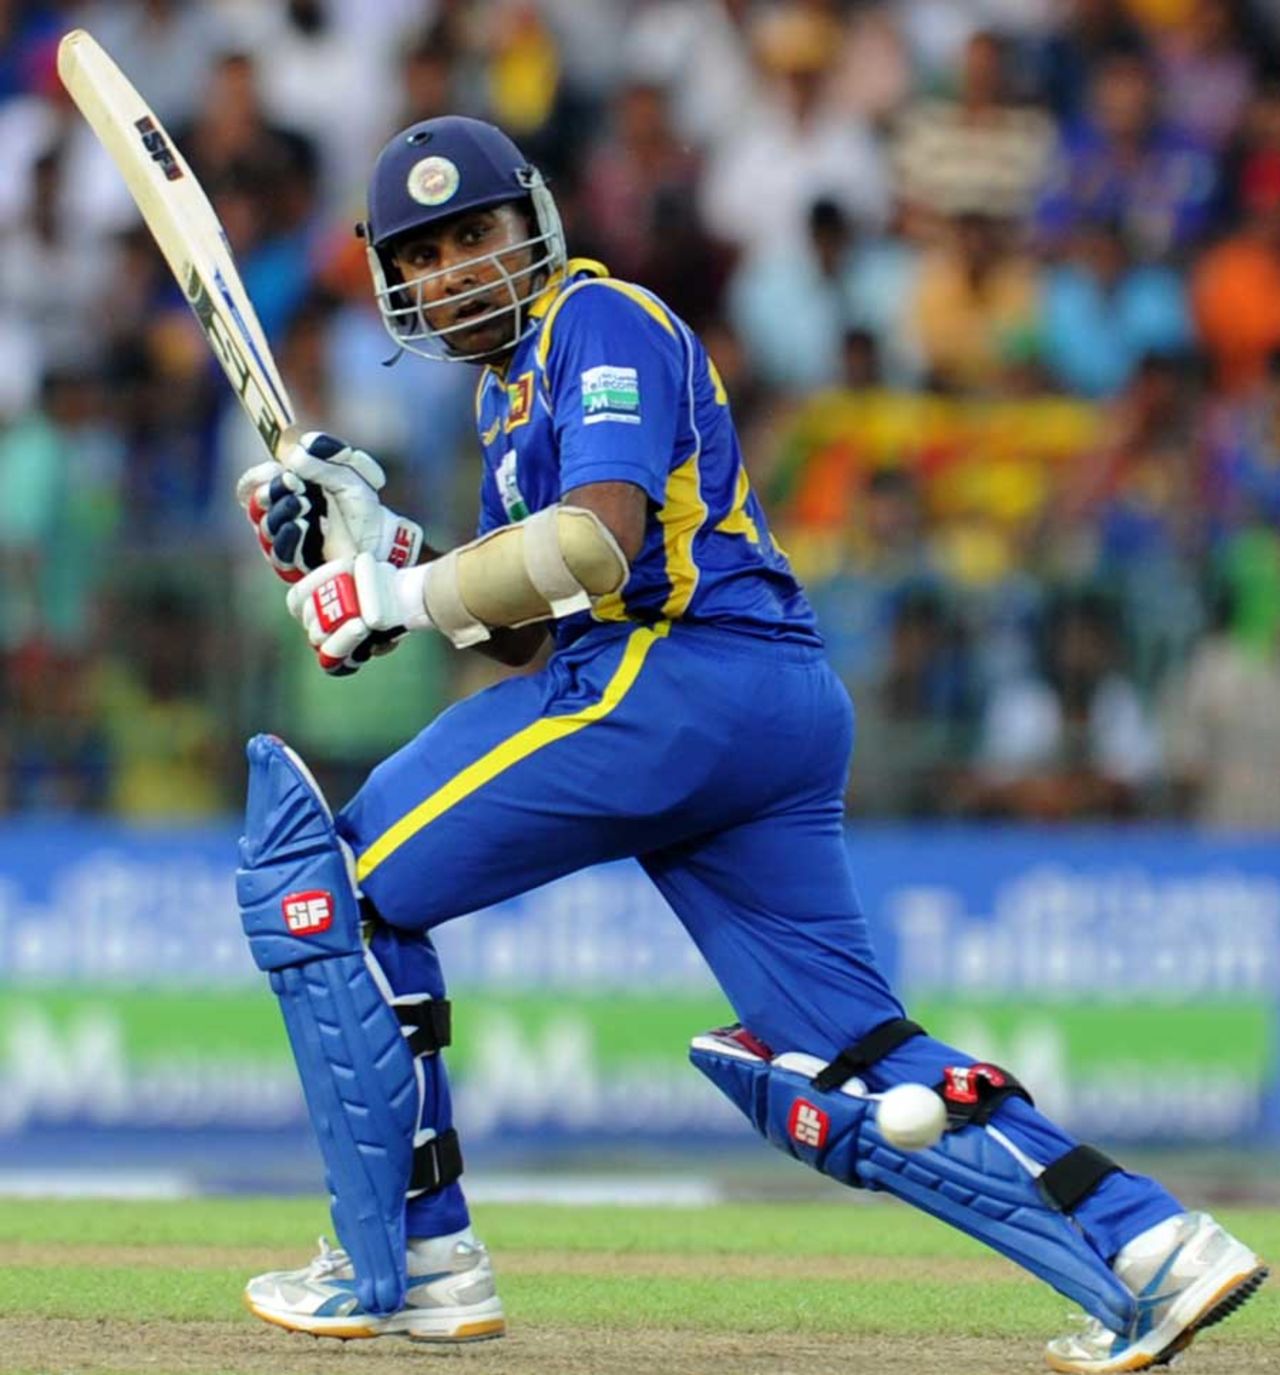 Mahela Jayawardene was involved in a century stand with Kumar Sangakkara, Sri Lanka v Pakistan, 4th ODI, Colombo, June 16, 2012